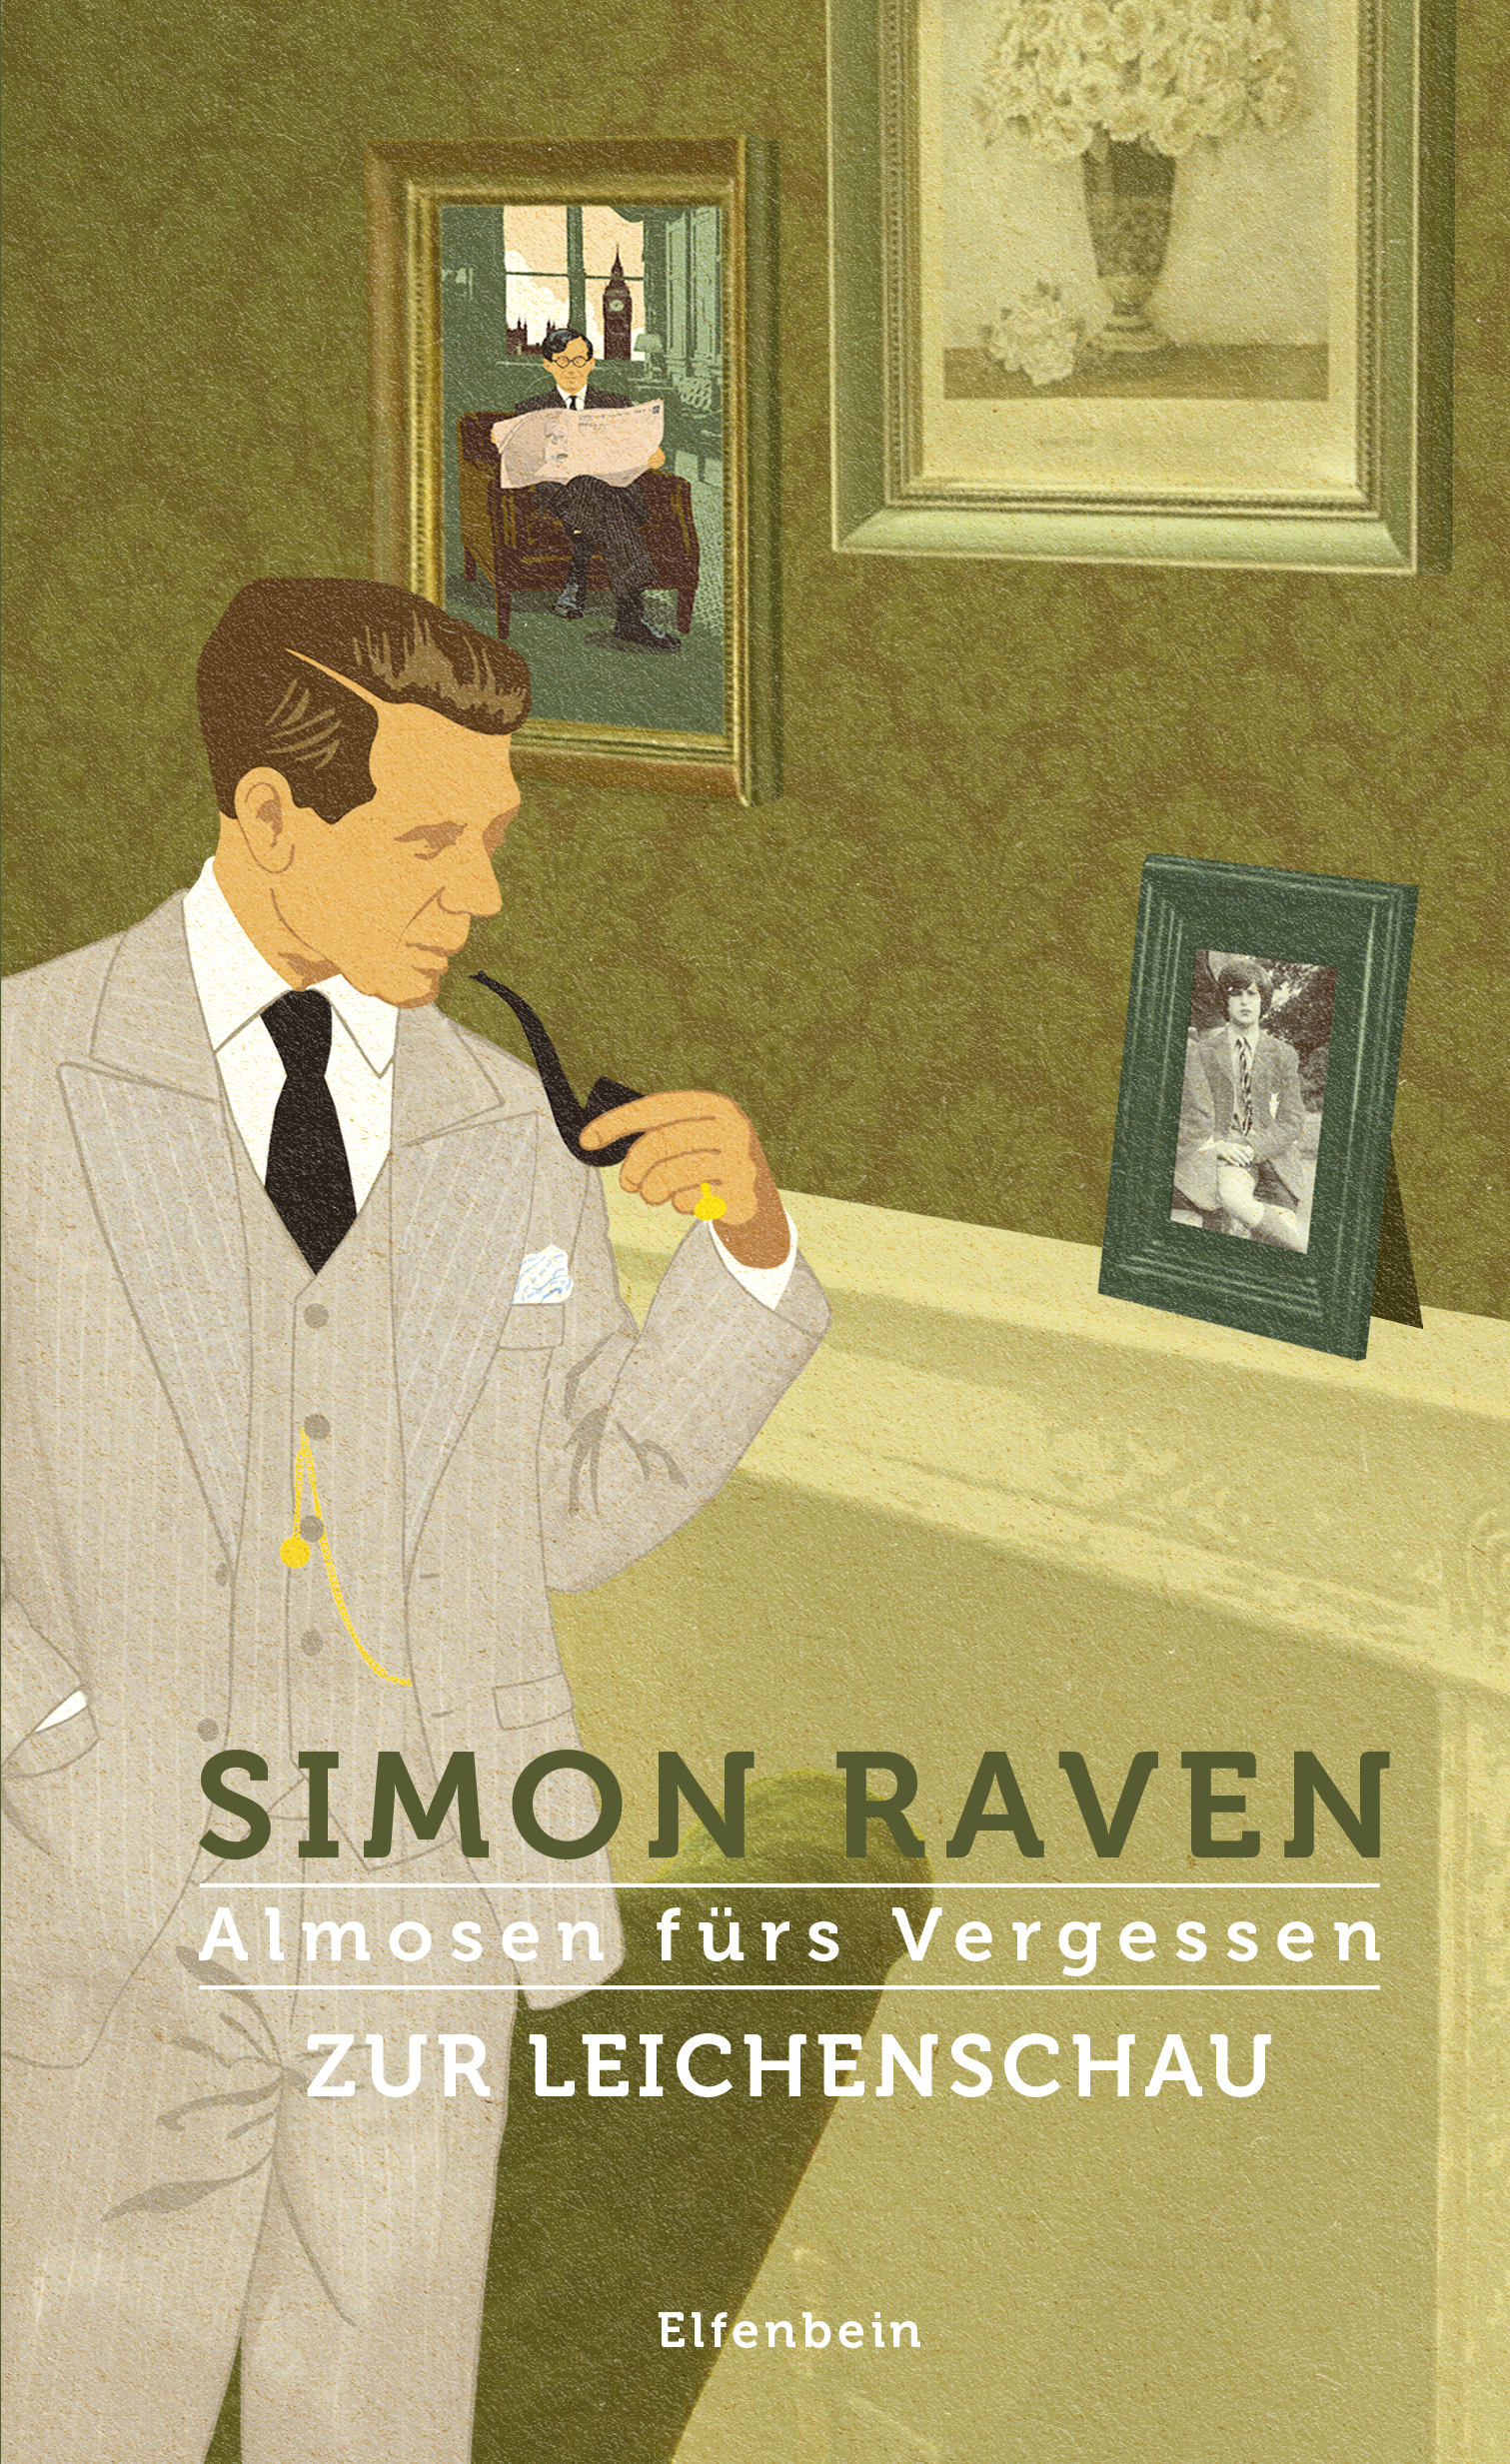 Simon Raven: Zur Leichenschau